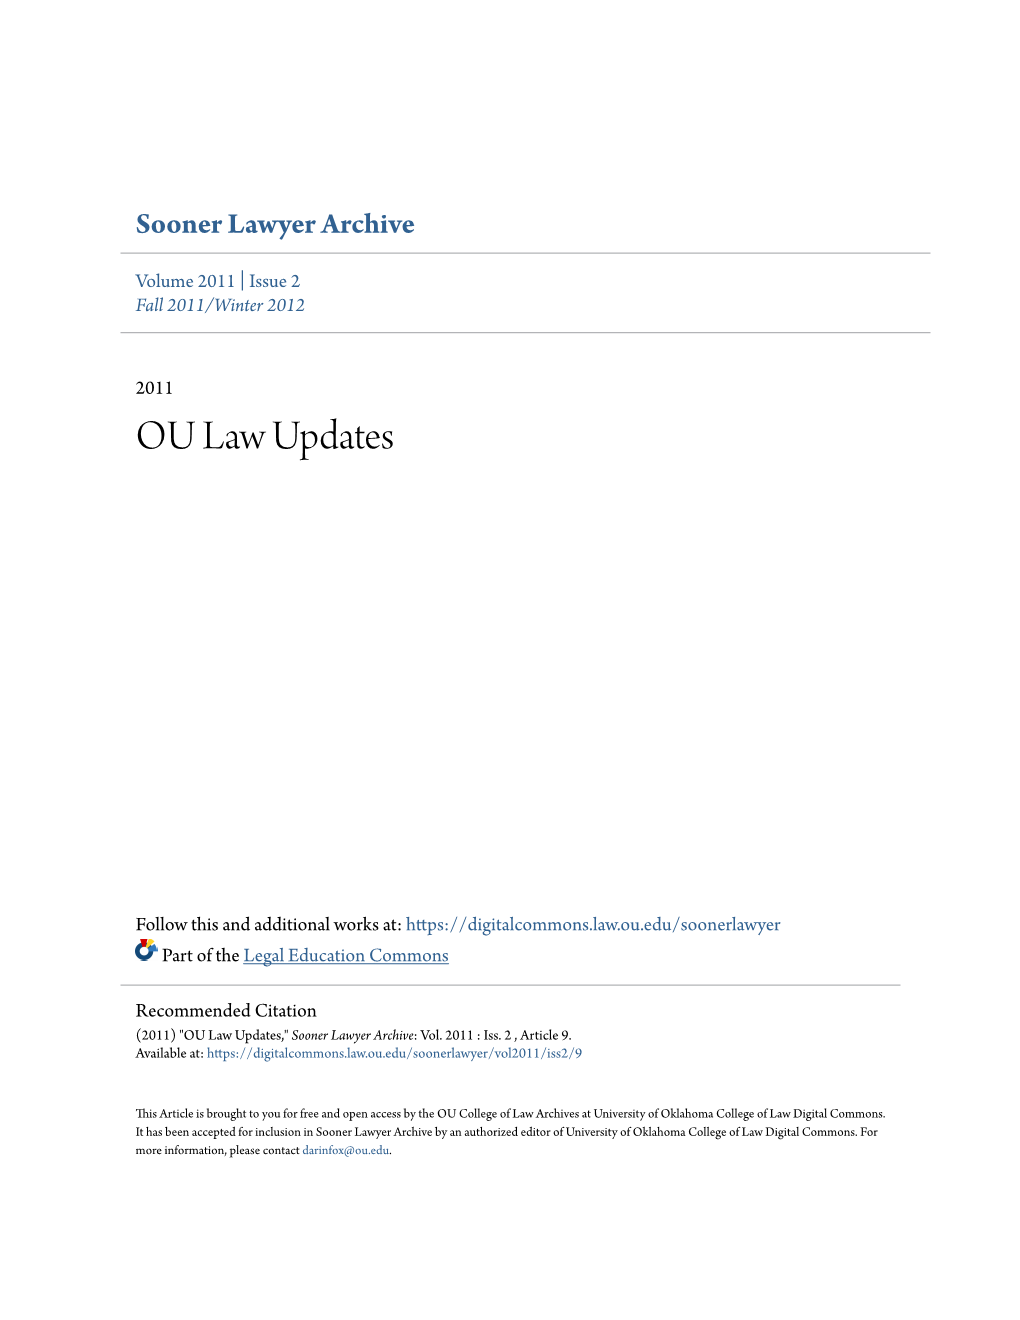 OU Law Updates